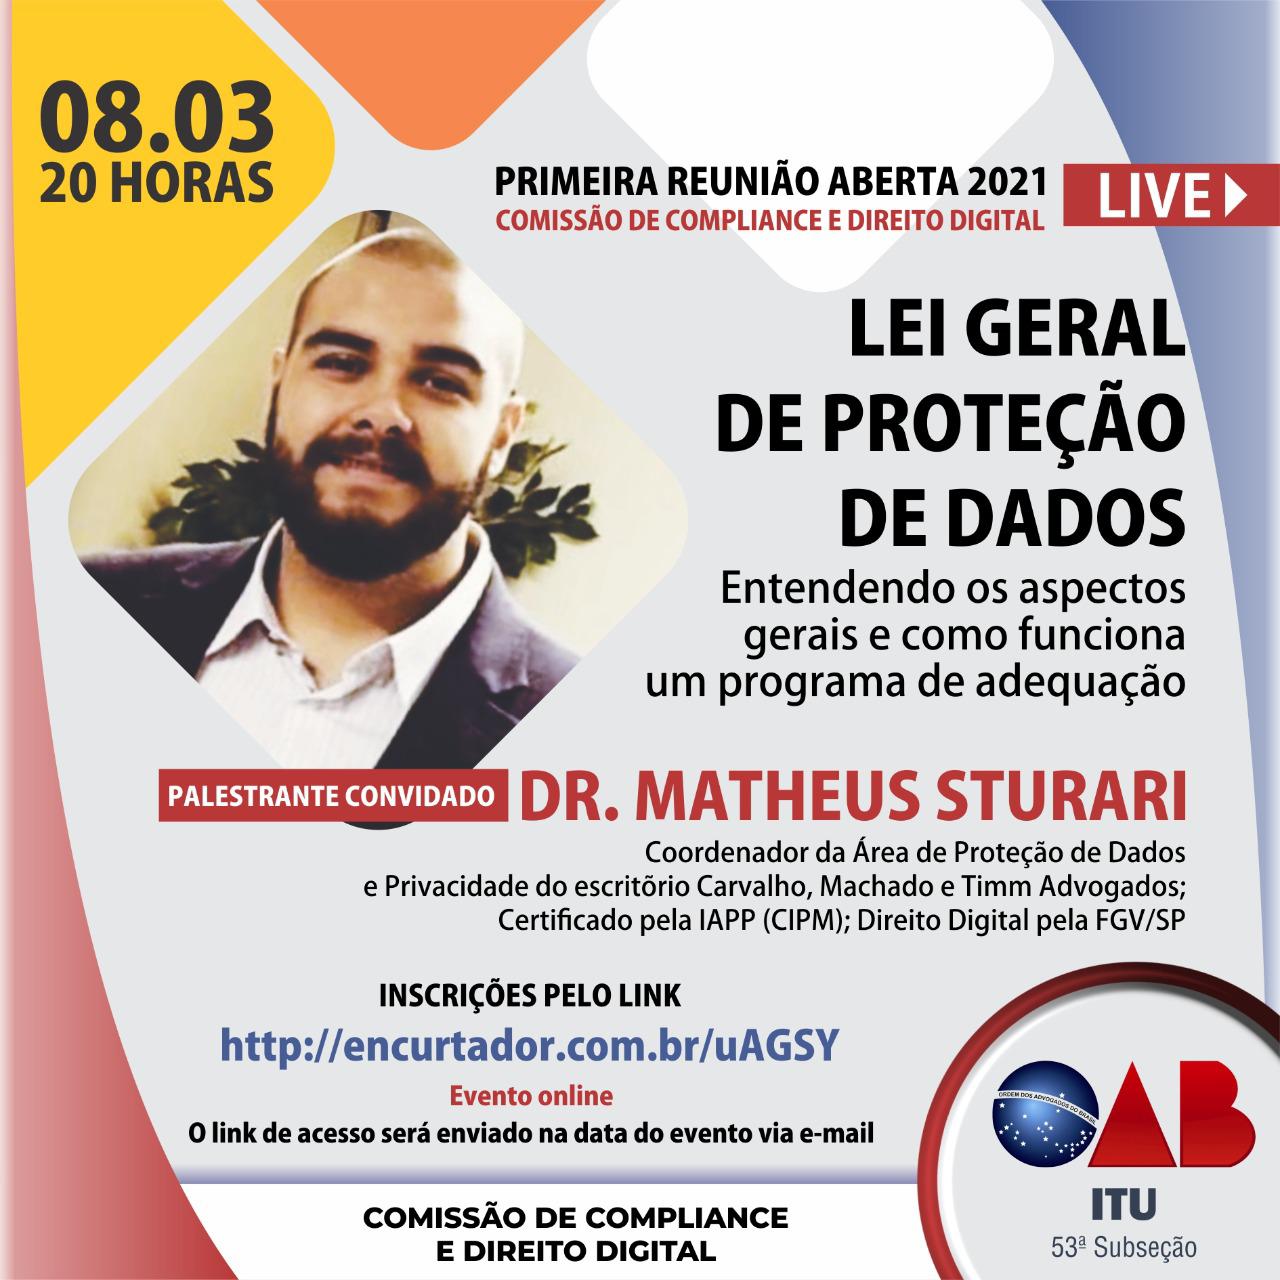 You are currently viewing 1ª Reunião Aberta 2021 – LGPD com Comissão 10 da OAB Itu